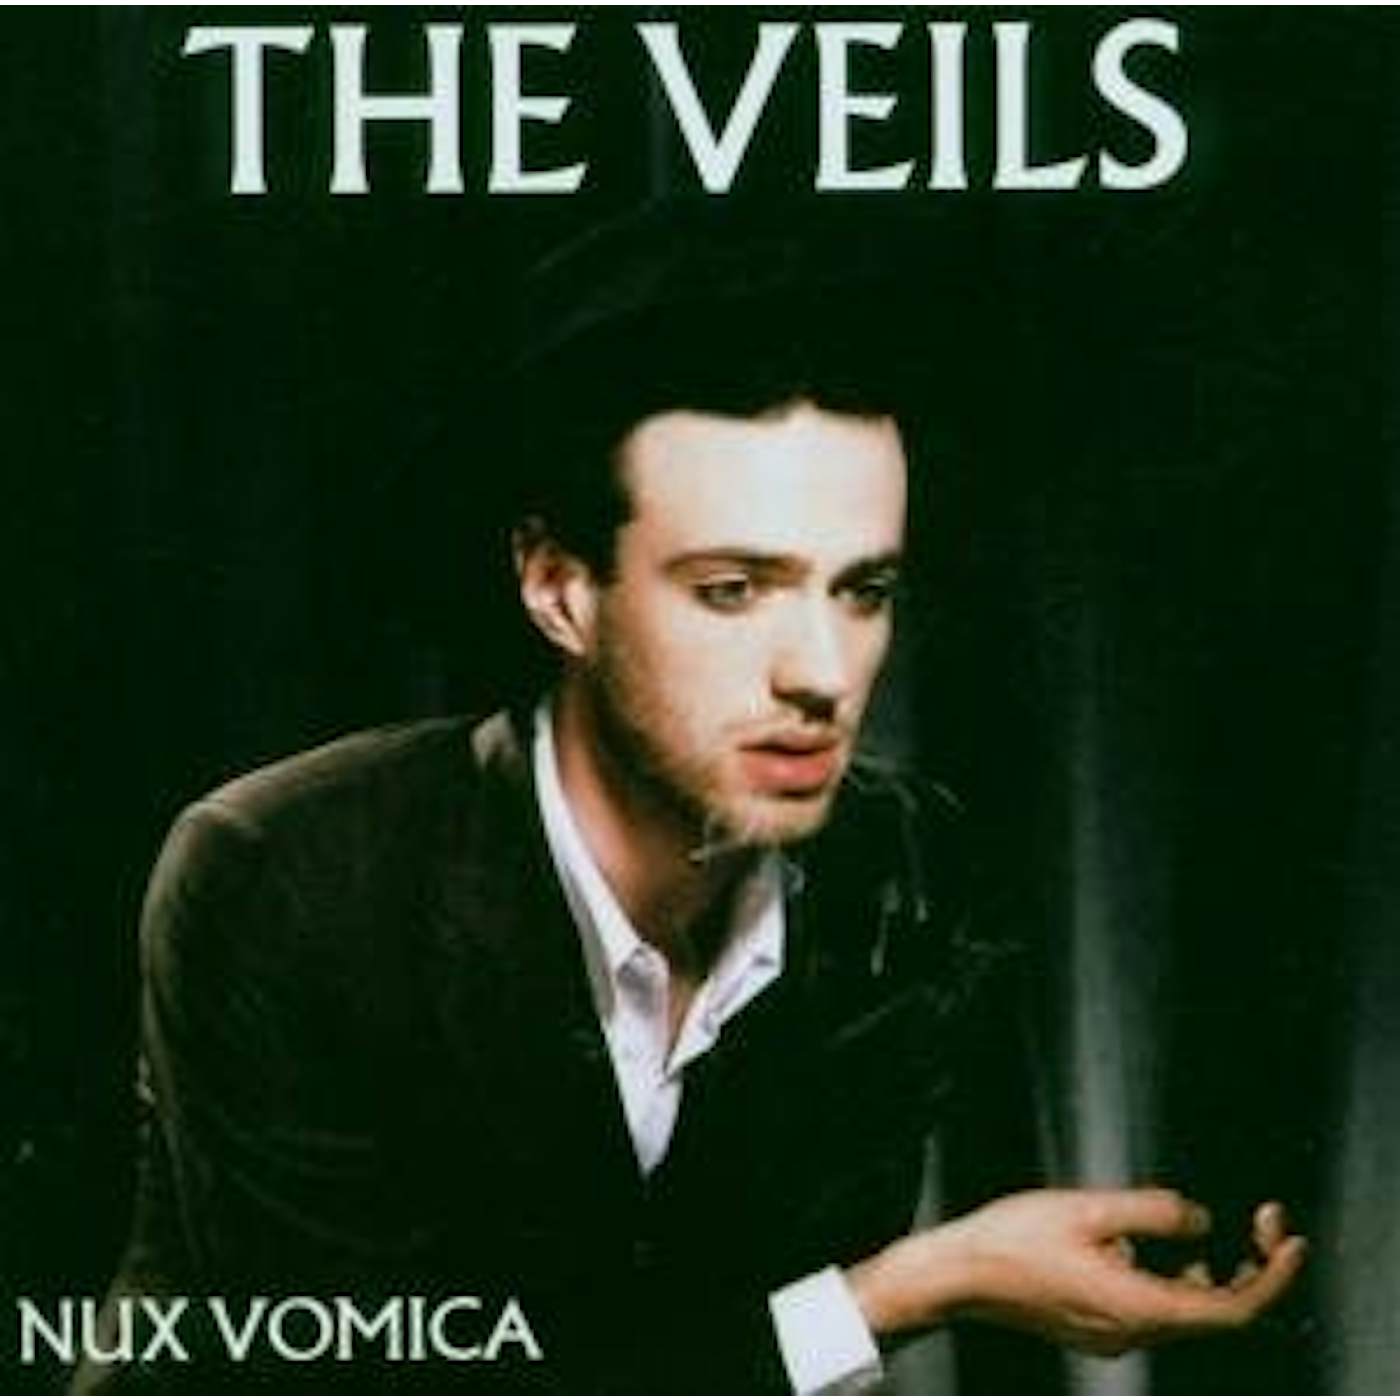 The Veils NUX VOMICA Vinyl Record - UK Release